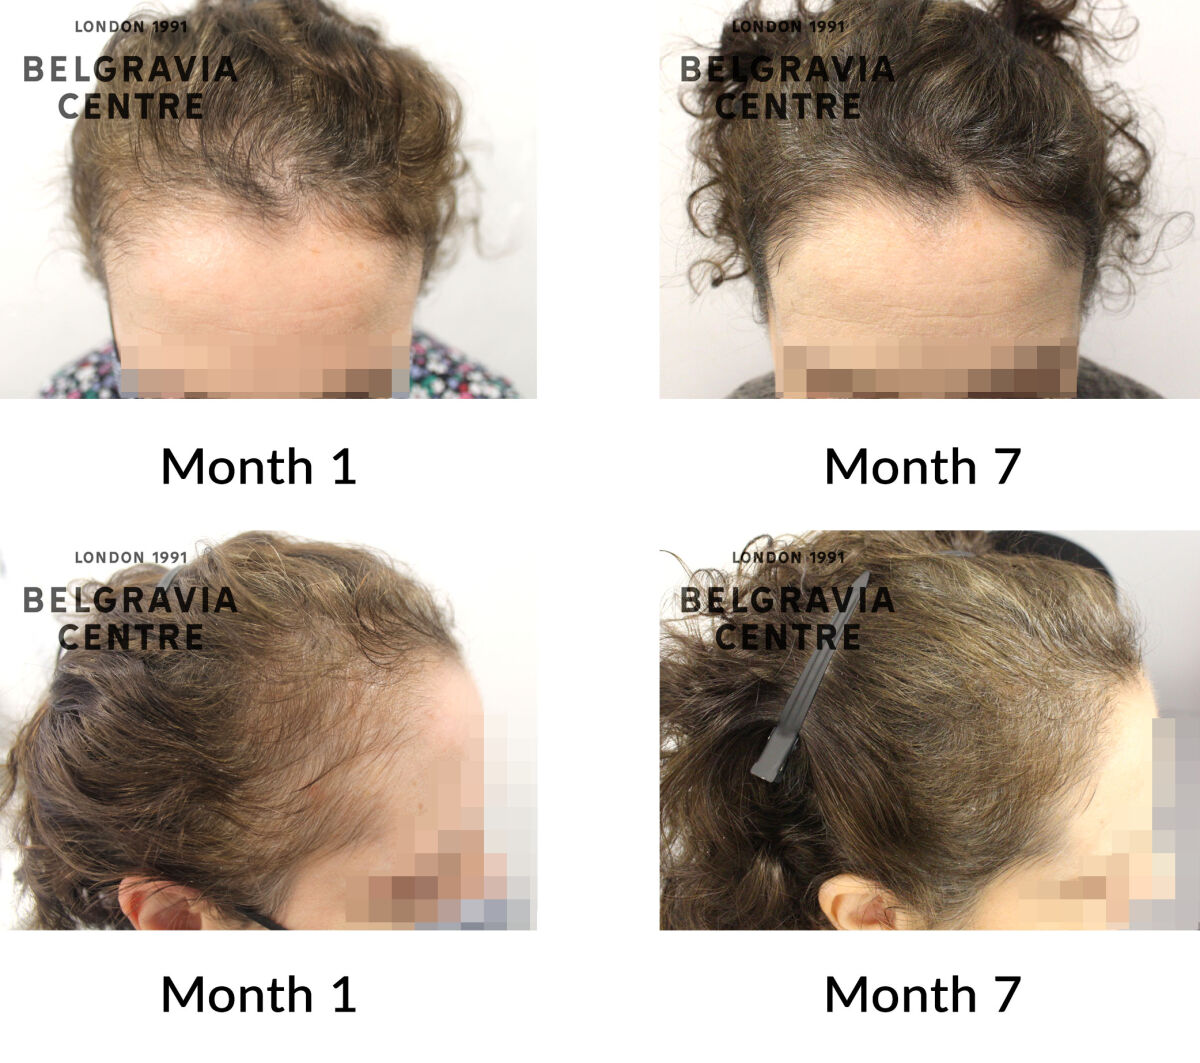 female pattern hair loss the belgravia centre 432636